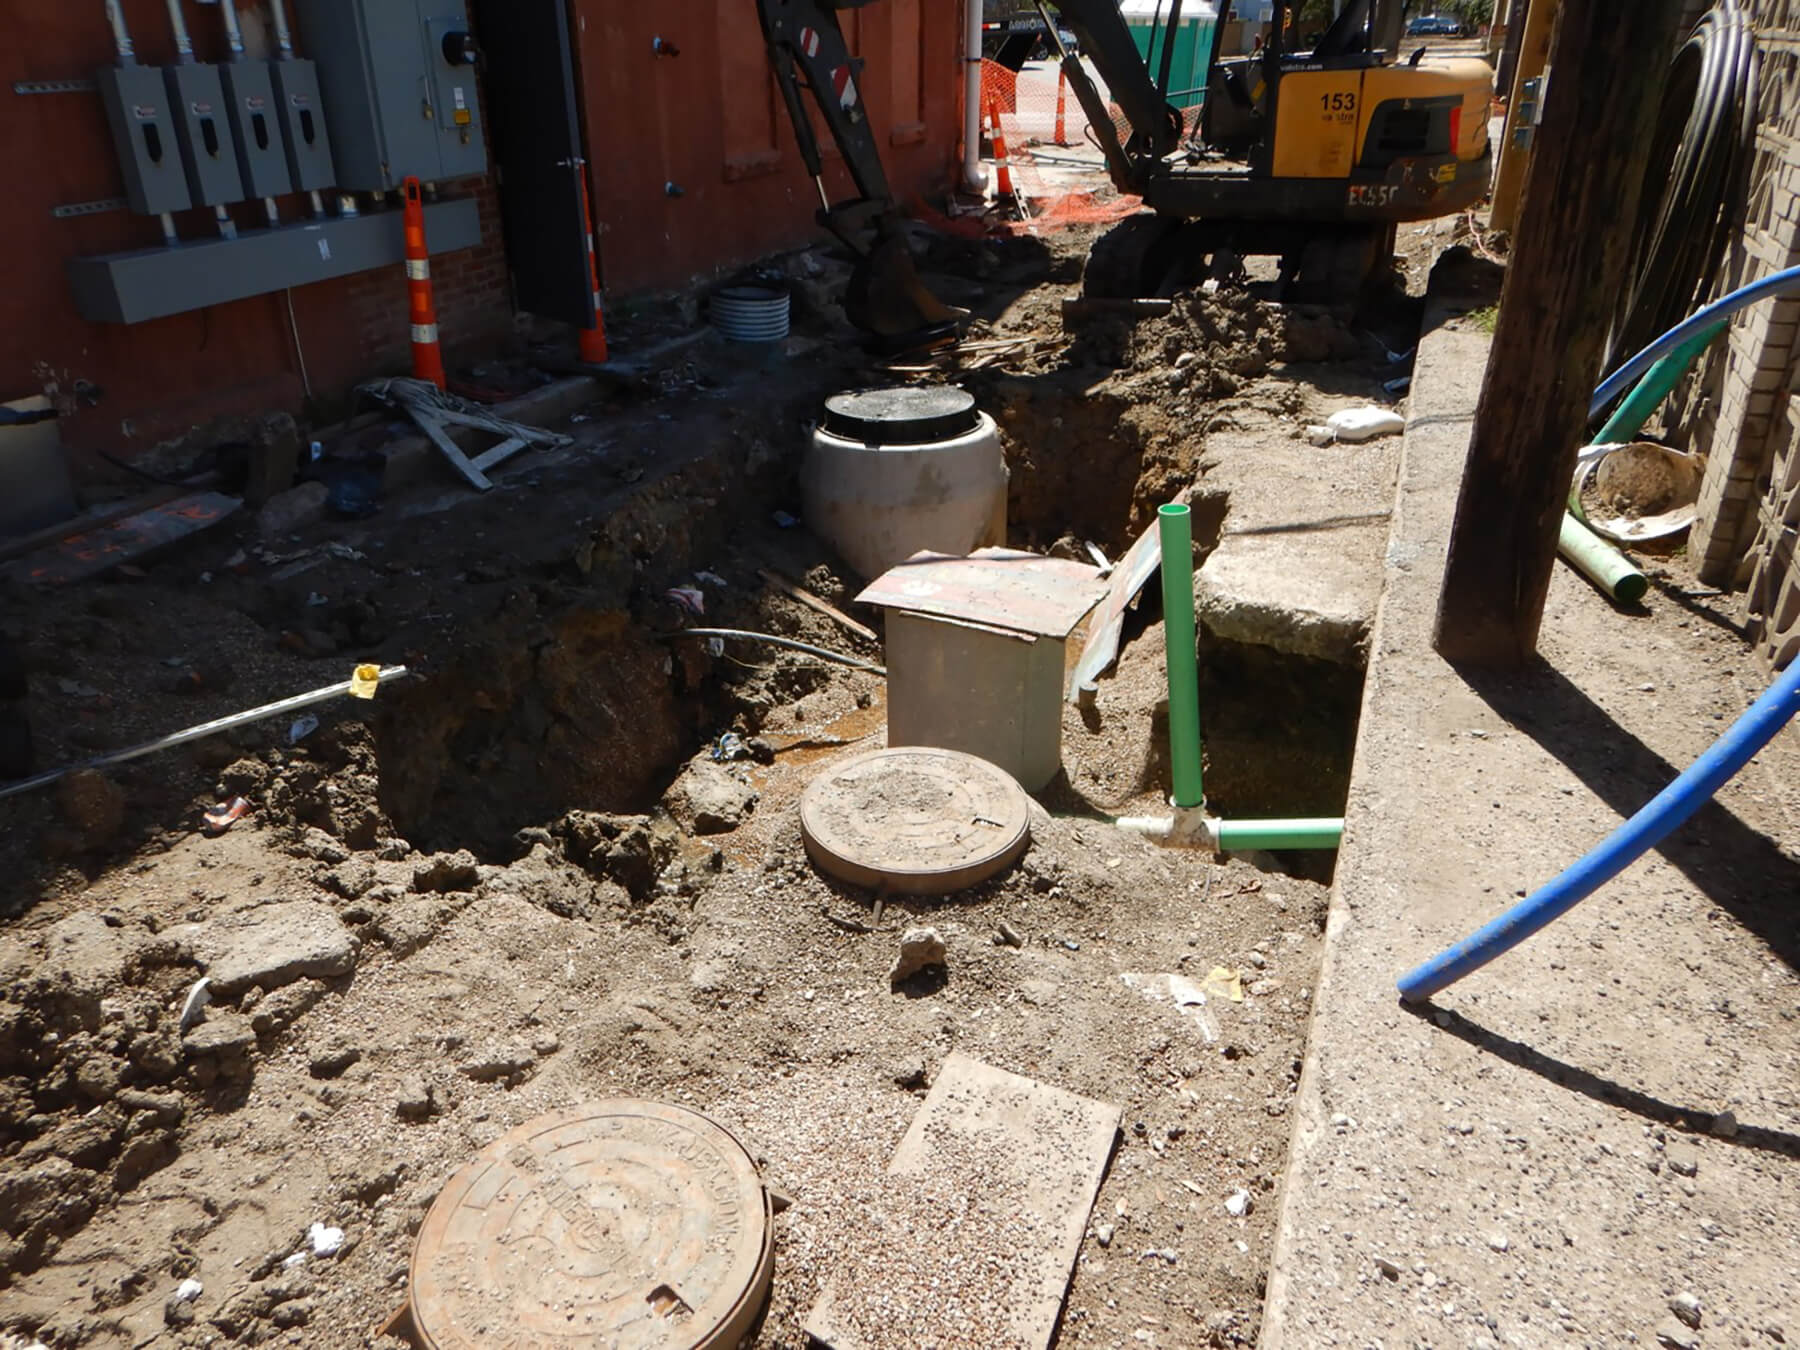 Buried Utilities in an alley in downtown Ennis